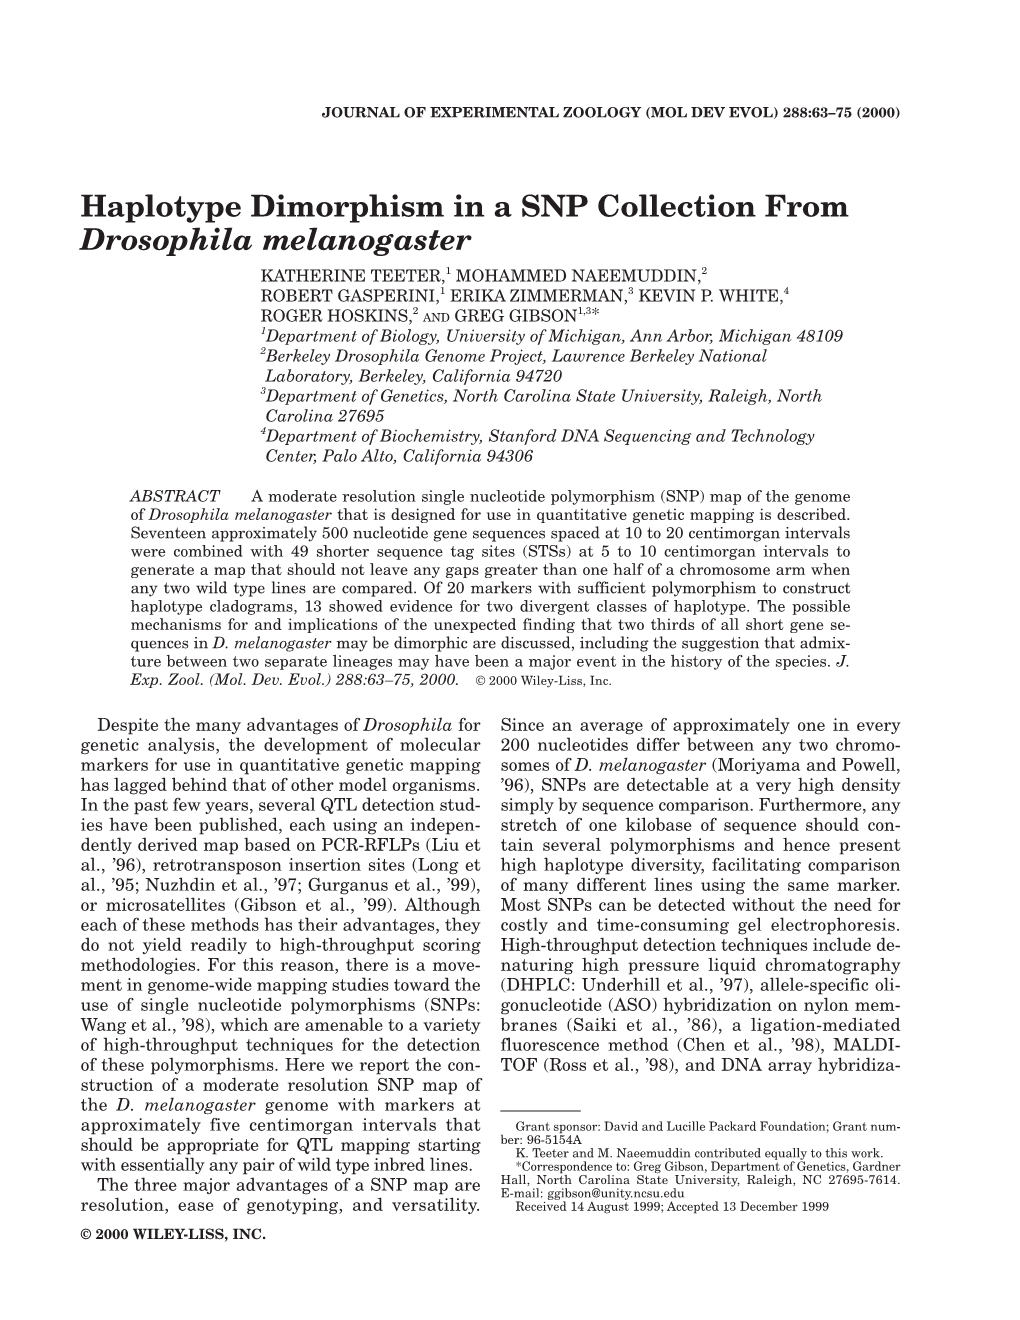 Haplotype Dimorphism in a SNP Collection from Drosophila Melanogaster KATHERINE TEETER,1 MOHAMMED NAEEMUDDIN,2 ROBERT GASPERINI,1 ERIKA ZIMMERMAN,3 KEVIN P